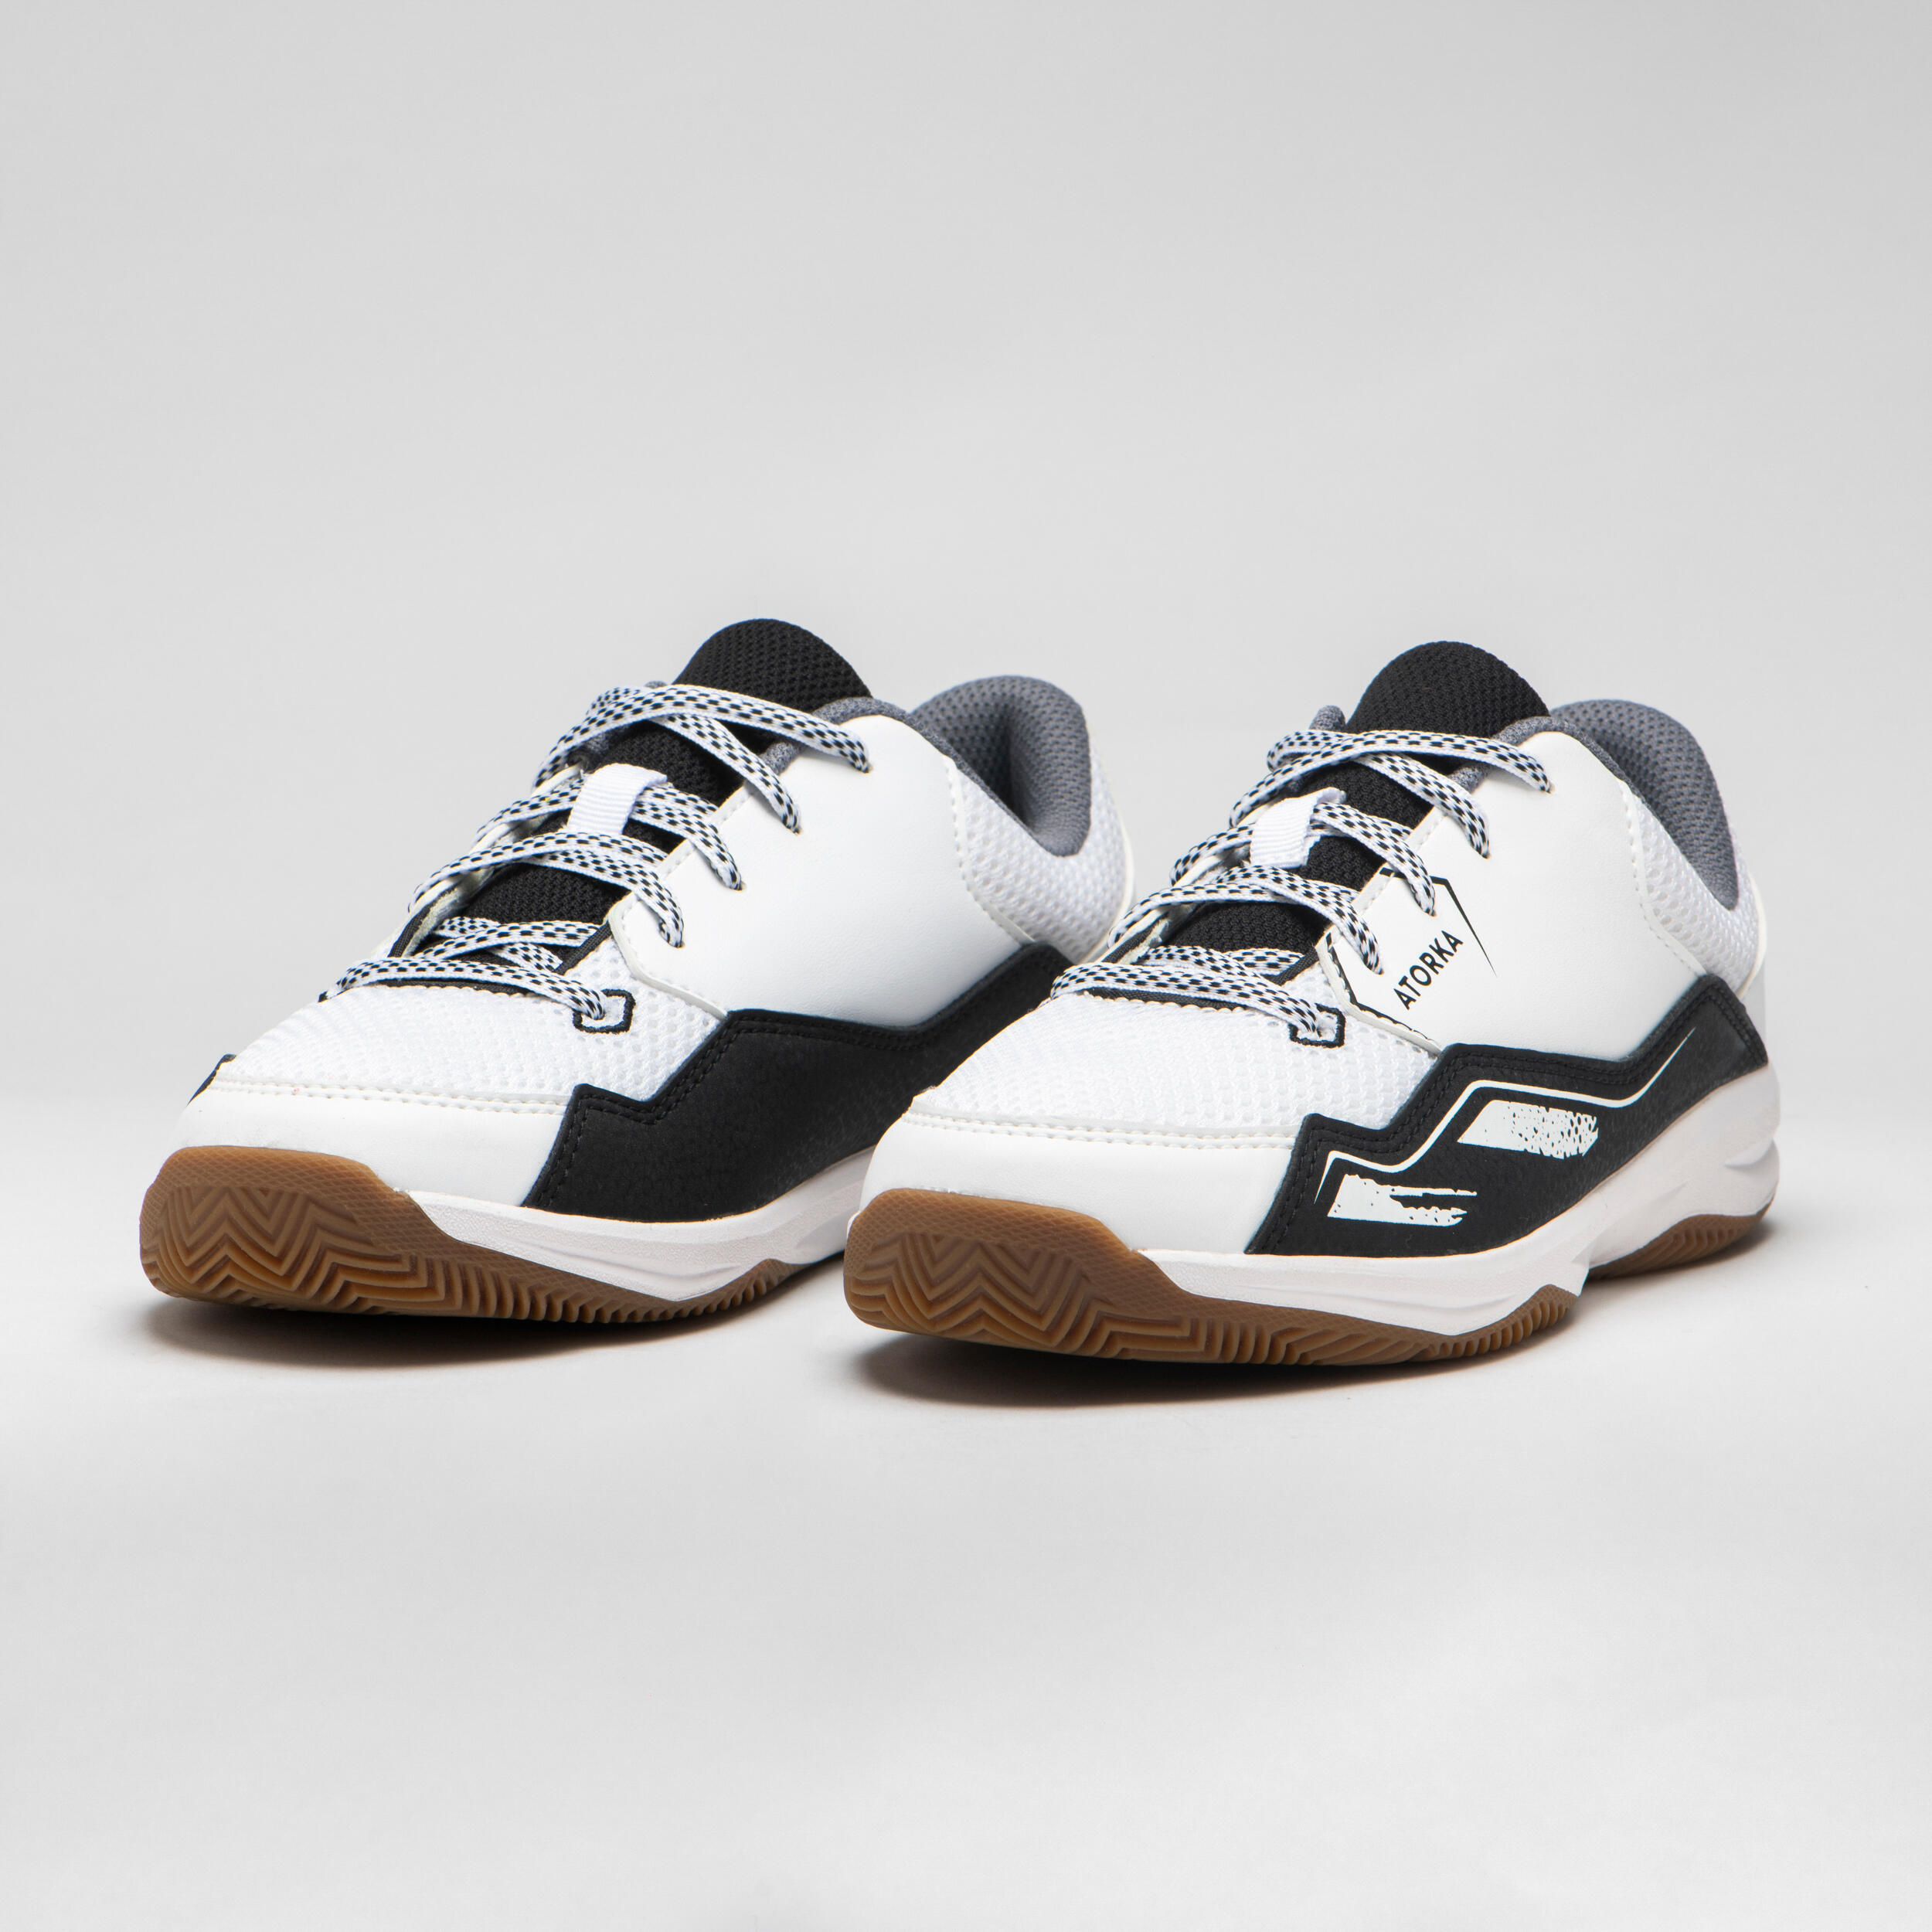 Kids' Lace-Up Handball Shoes H100 - White/Black 4/8